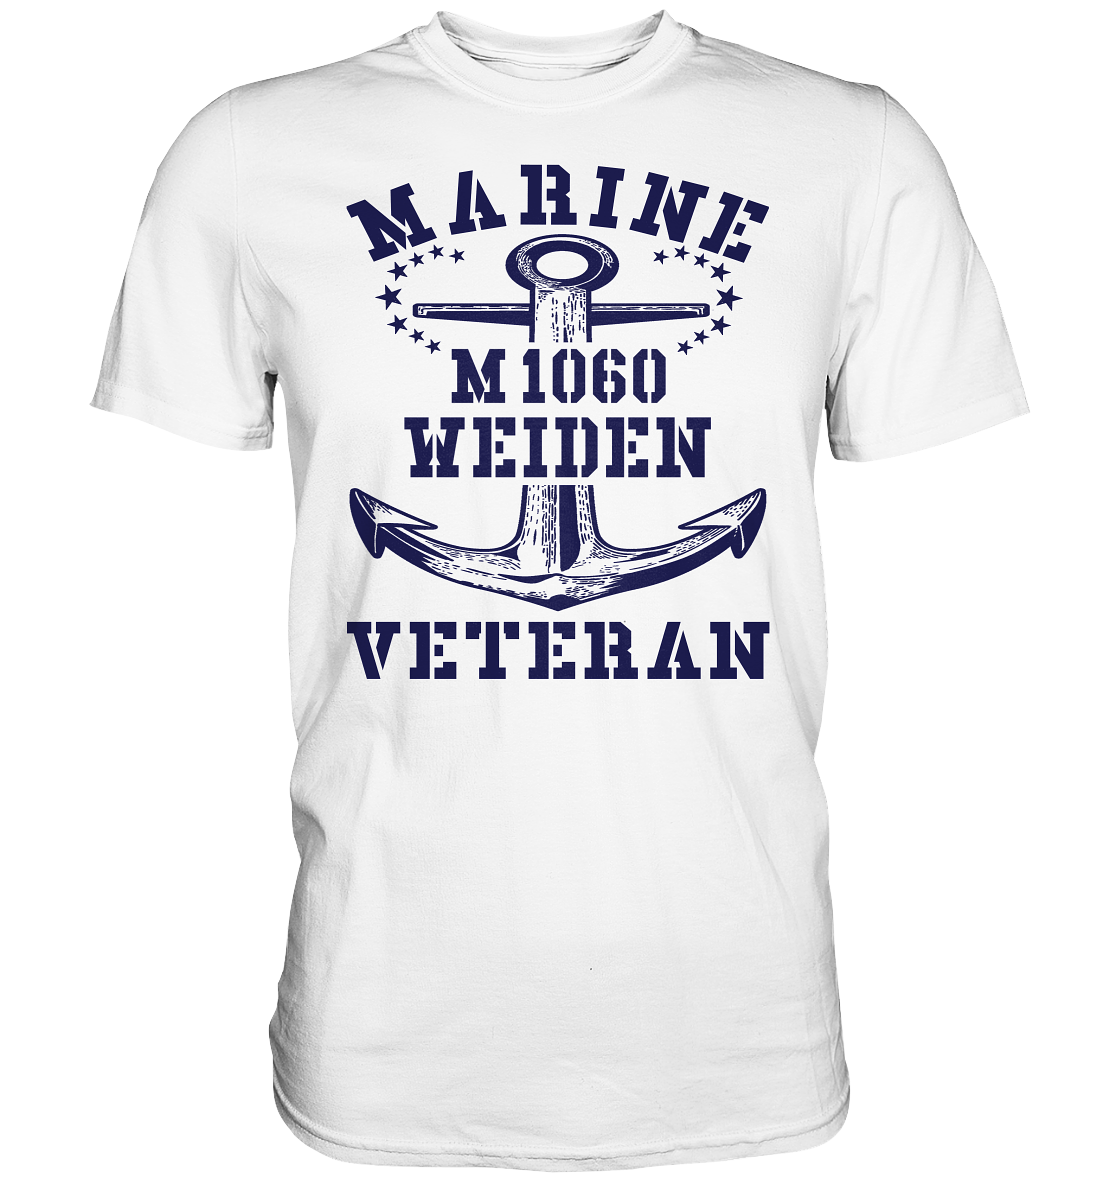 Mij.-Boot M1060 WEIDEN Marine Veteran - Premium Shirt